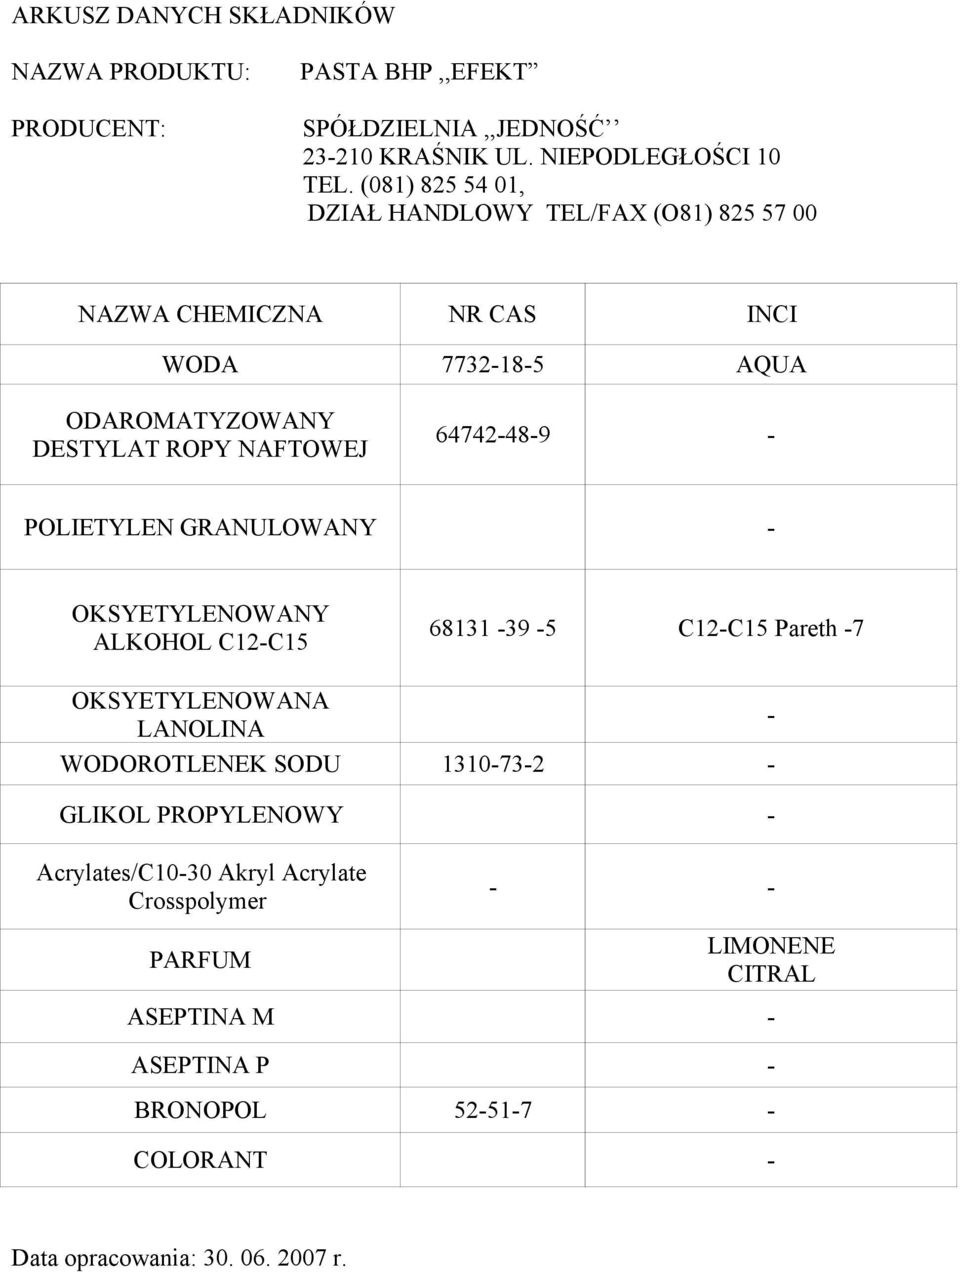 LANOLINA - WODOROTLENEK SODU 1310-73-2 - GLIKOL PROPYLENOWY - Acrylates/C10-30 Akryl